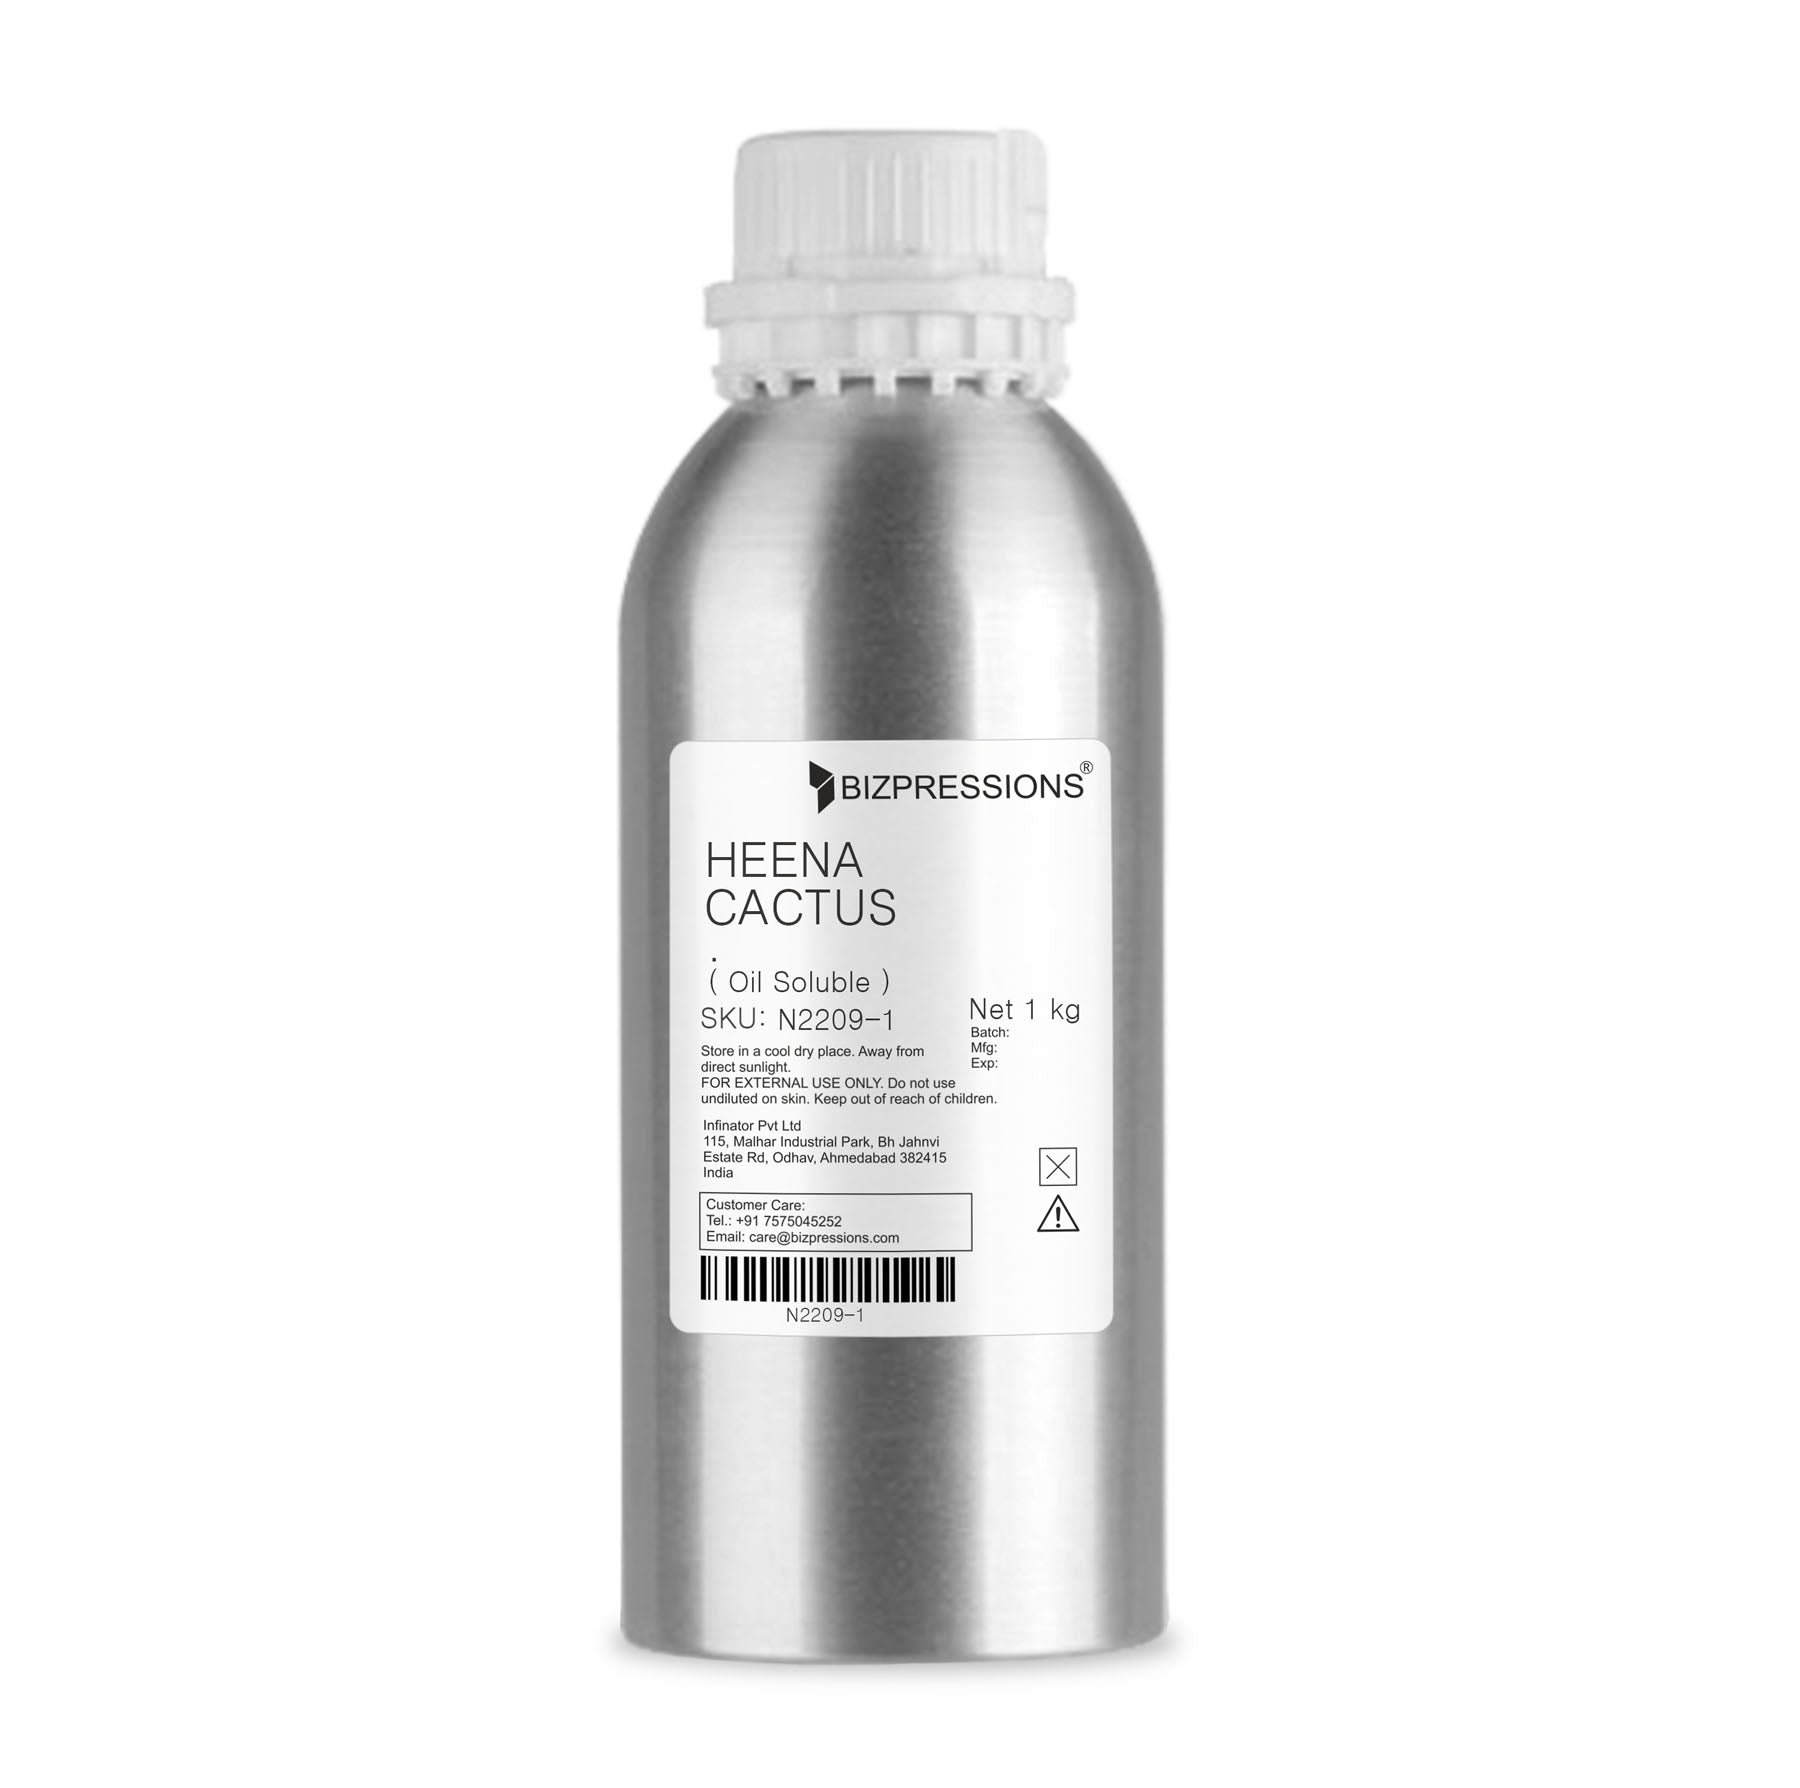 HEENA CACTUS - Fragrance ( Oil Soluble ) - 1 kg